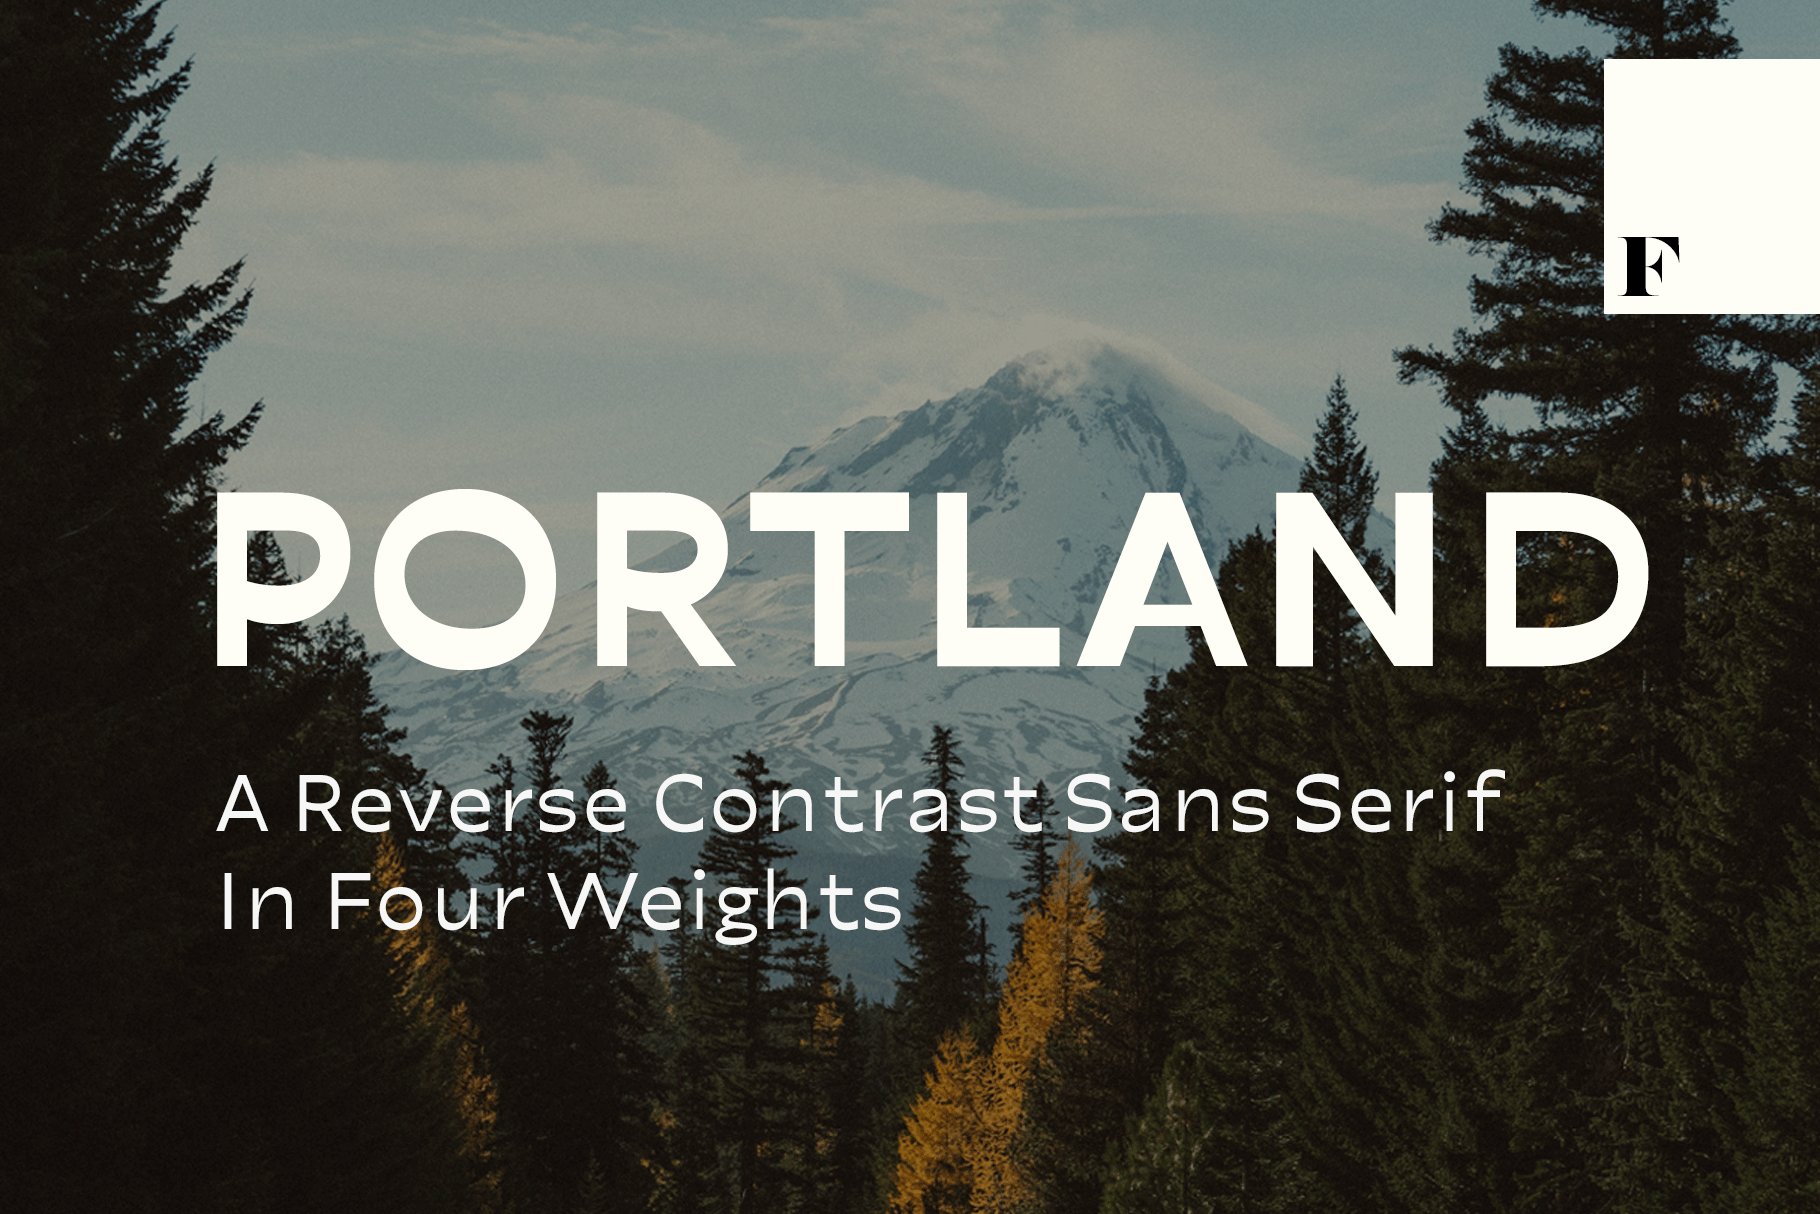 Portland Sans Serif cover image.